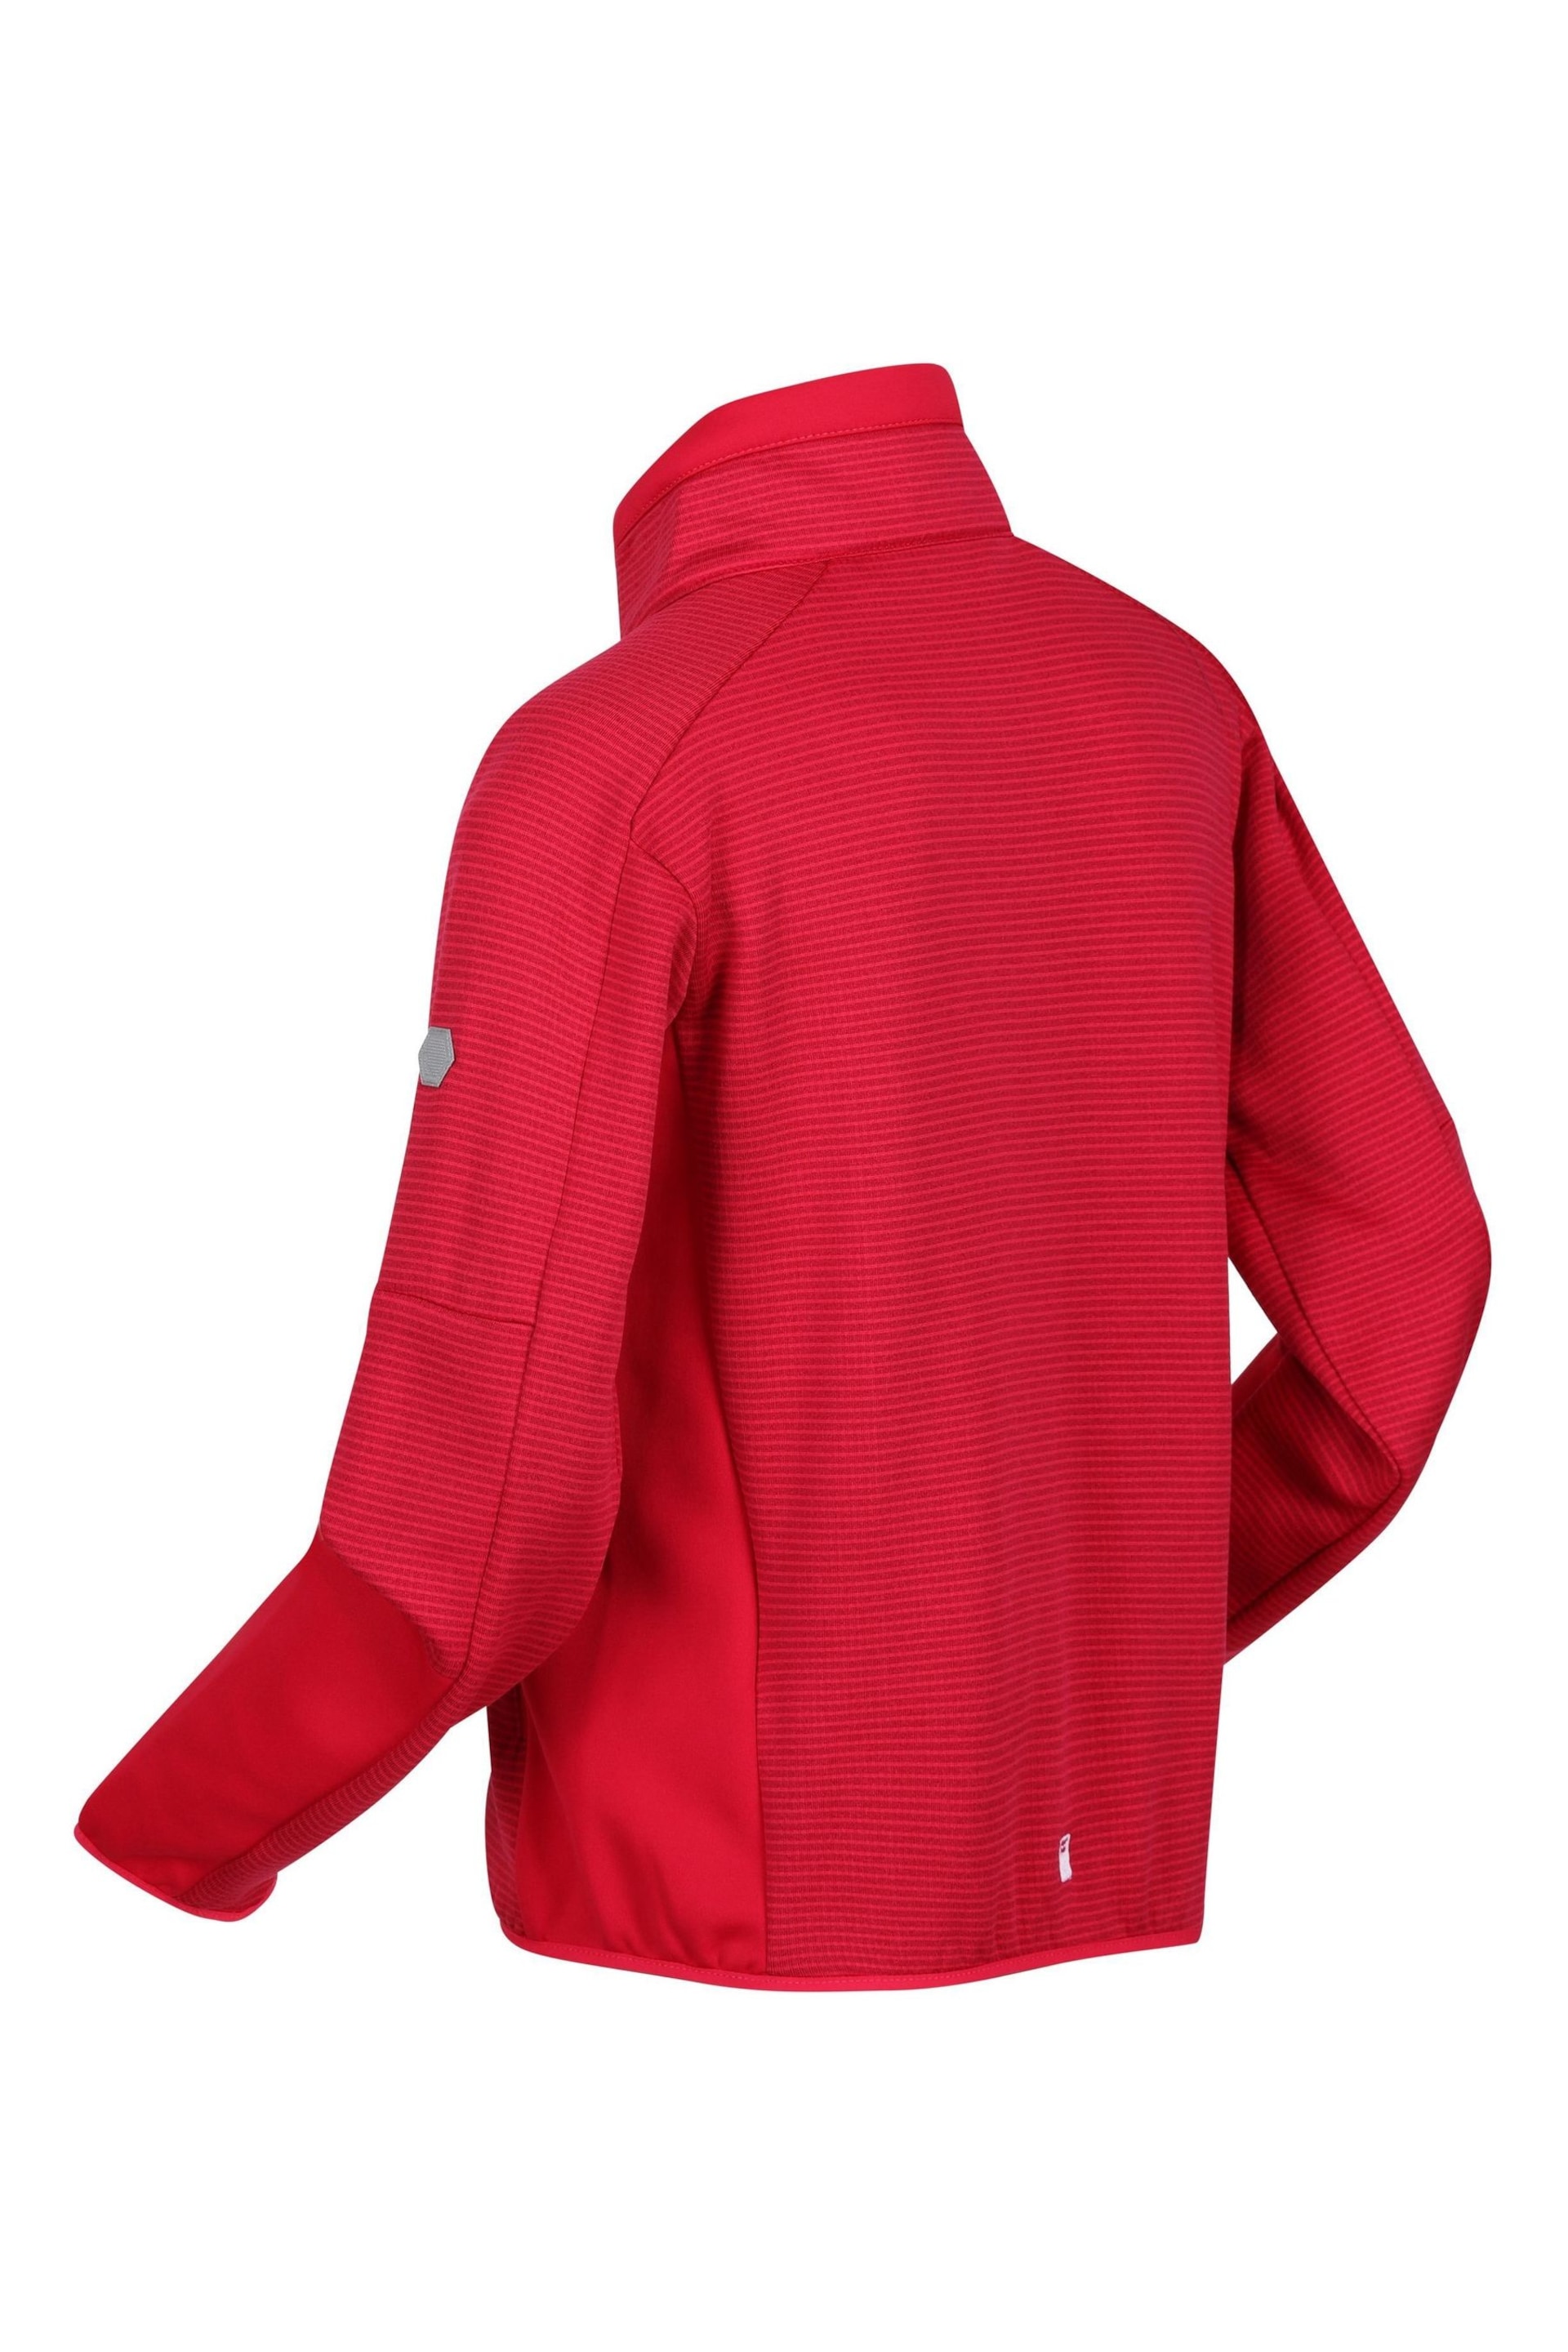 Regatta Red Junior Highton Winter Full Zip Fleece - Image 6 of 7